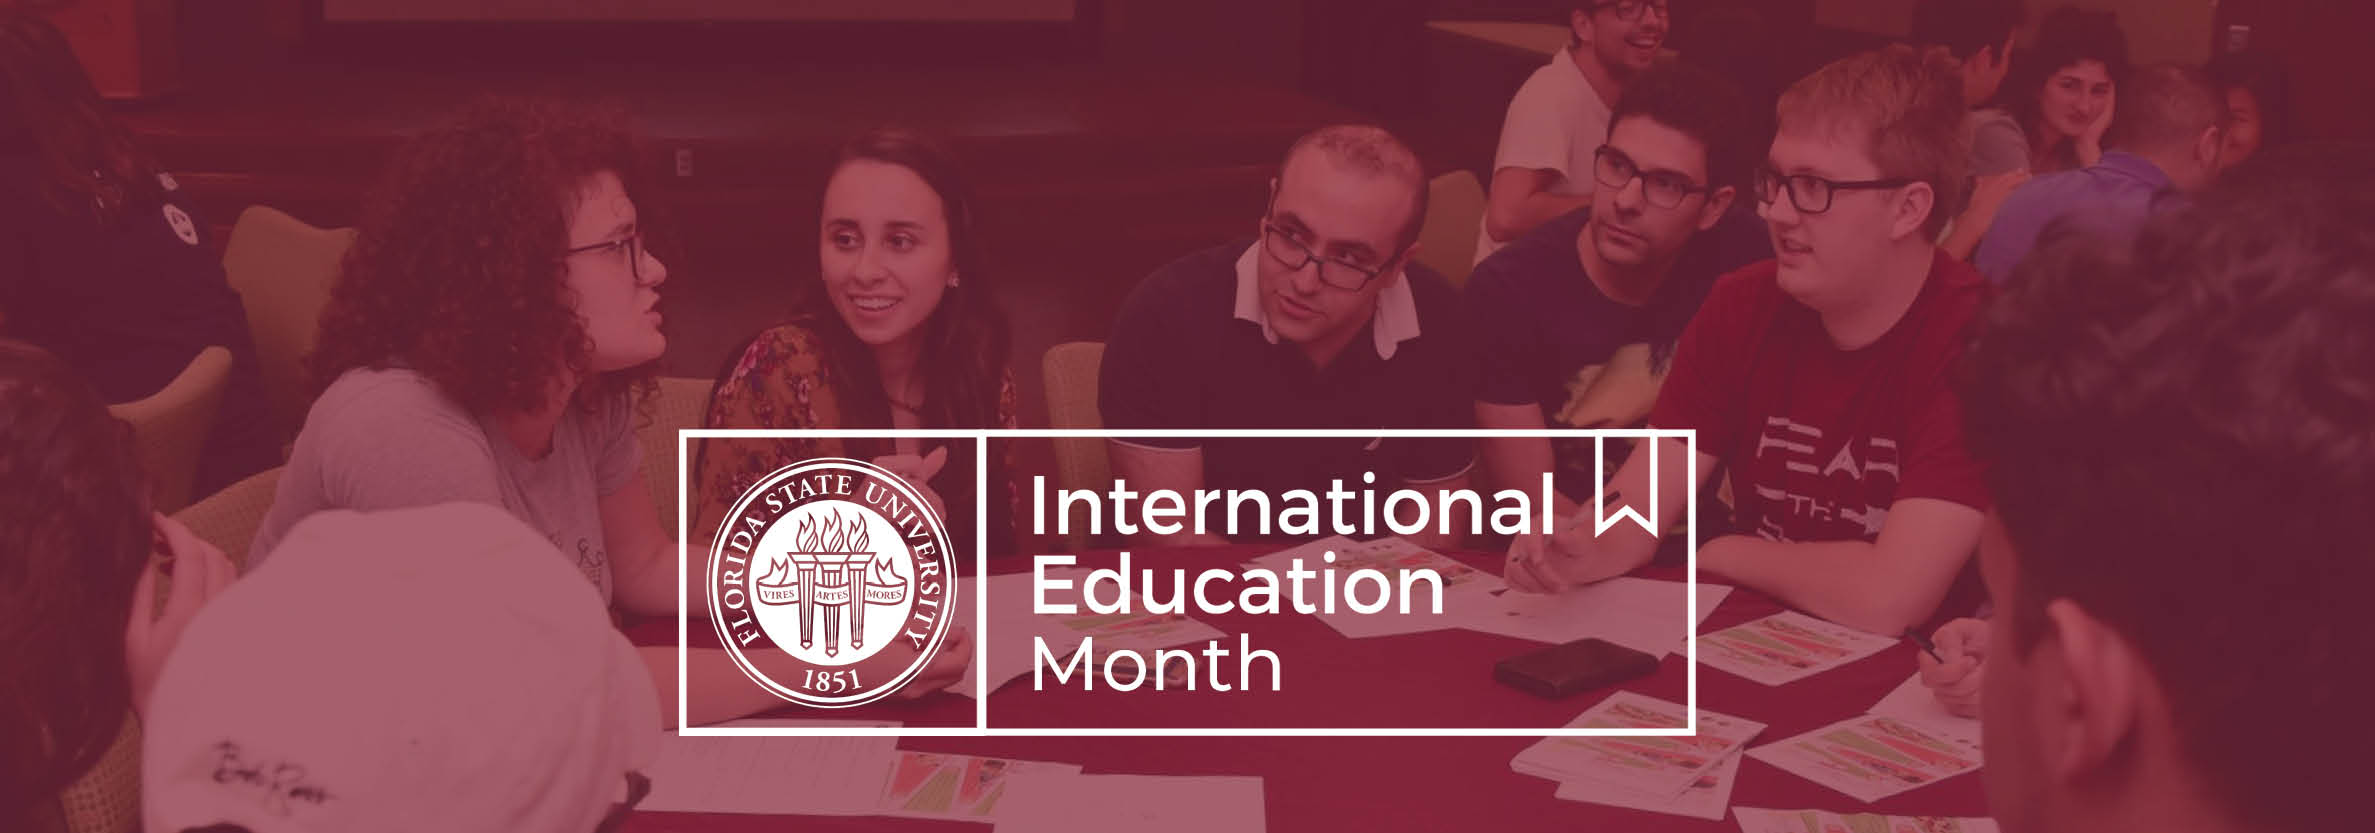 International Education Month 2019